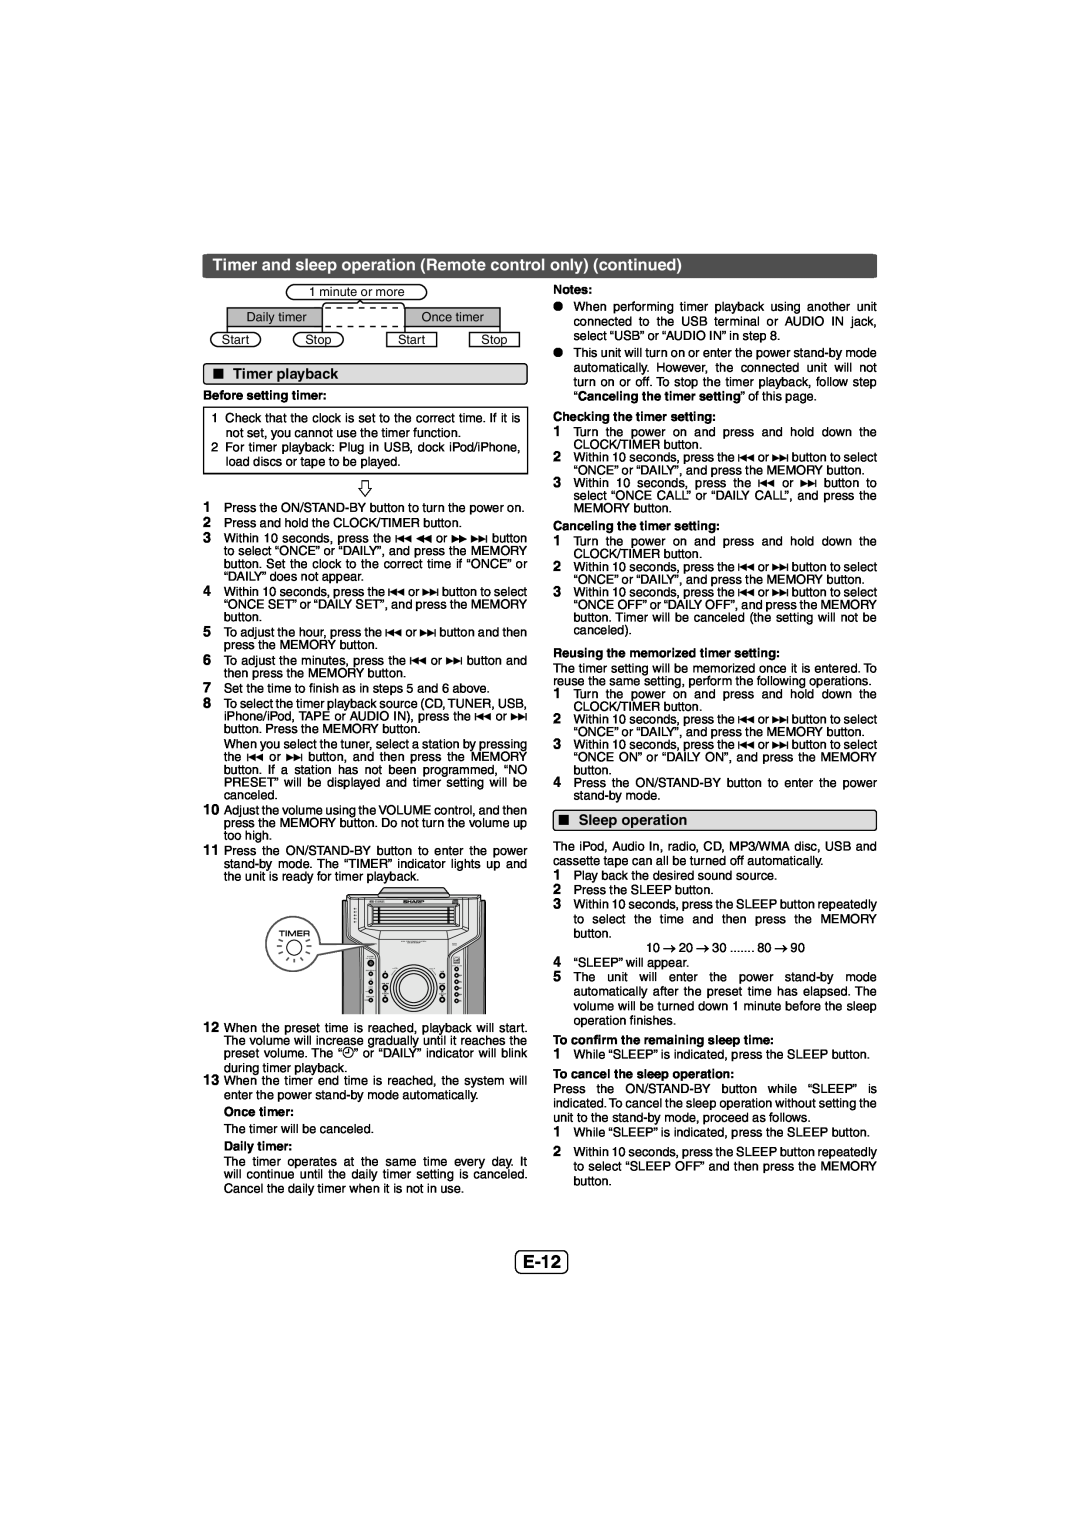 Sharp DHS1050P operation manual E-12, QTimer playback, QSleep operation 